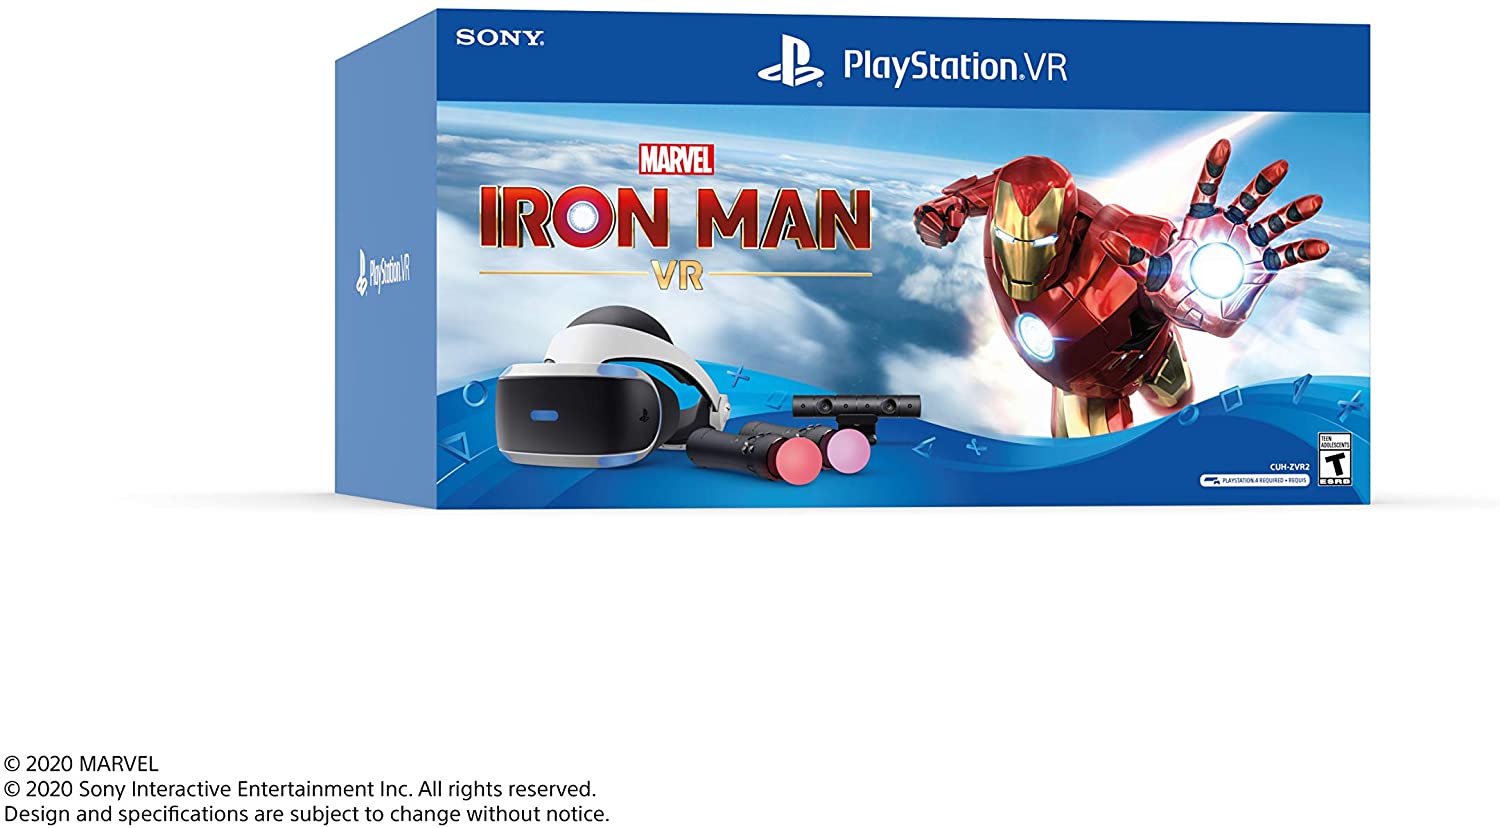 P4-Playstation VR Headset Bundles (W/ Iron Man)